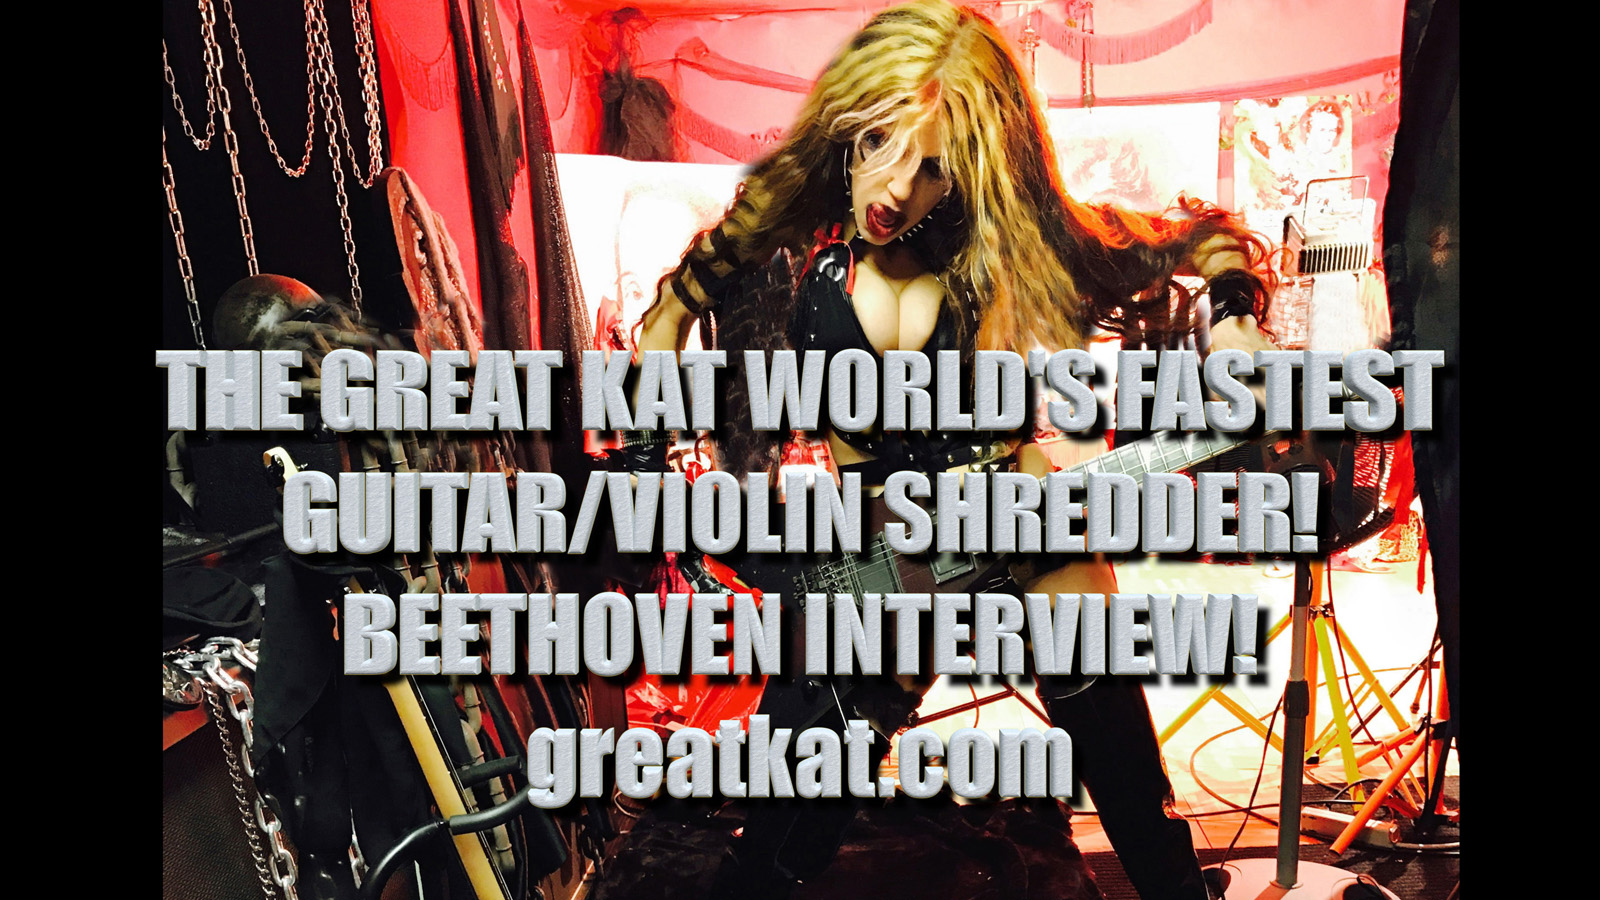 THE GREAT KAT WORLD'S FASTEST GUITAR/VIOLIN SHREDDER! BEETHOVEN INTERVIEW!